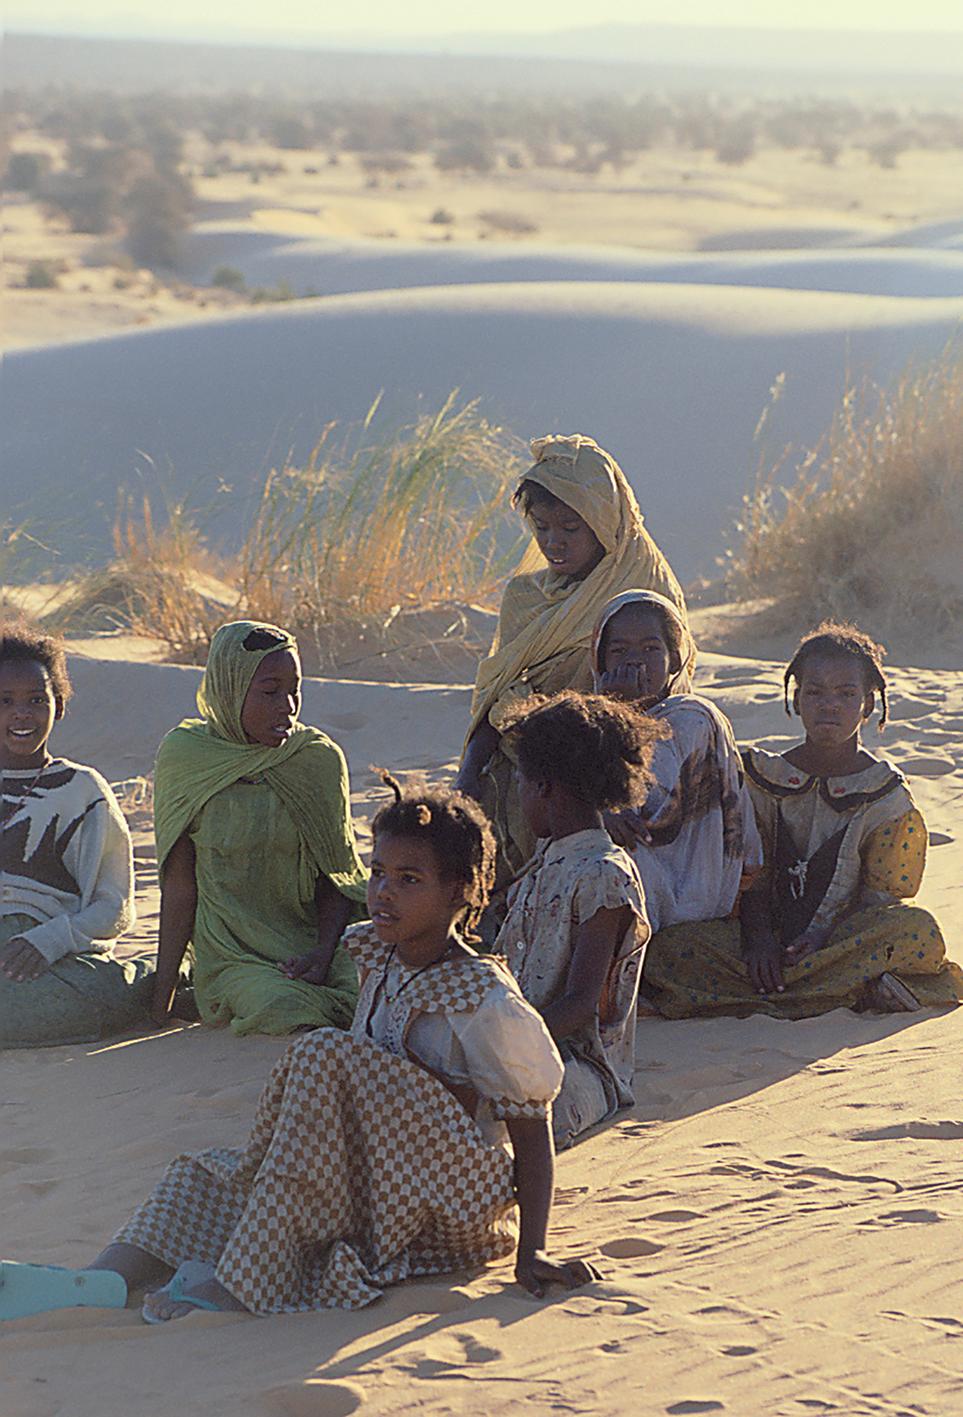 Bellec Portrait Photograph – Kinder aus der Wüste Mauritaniens